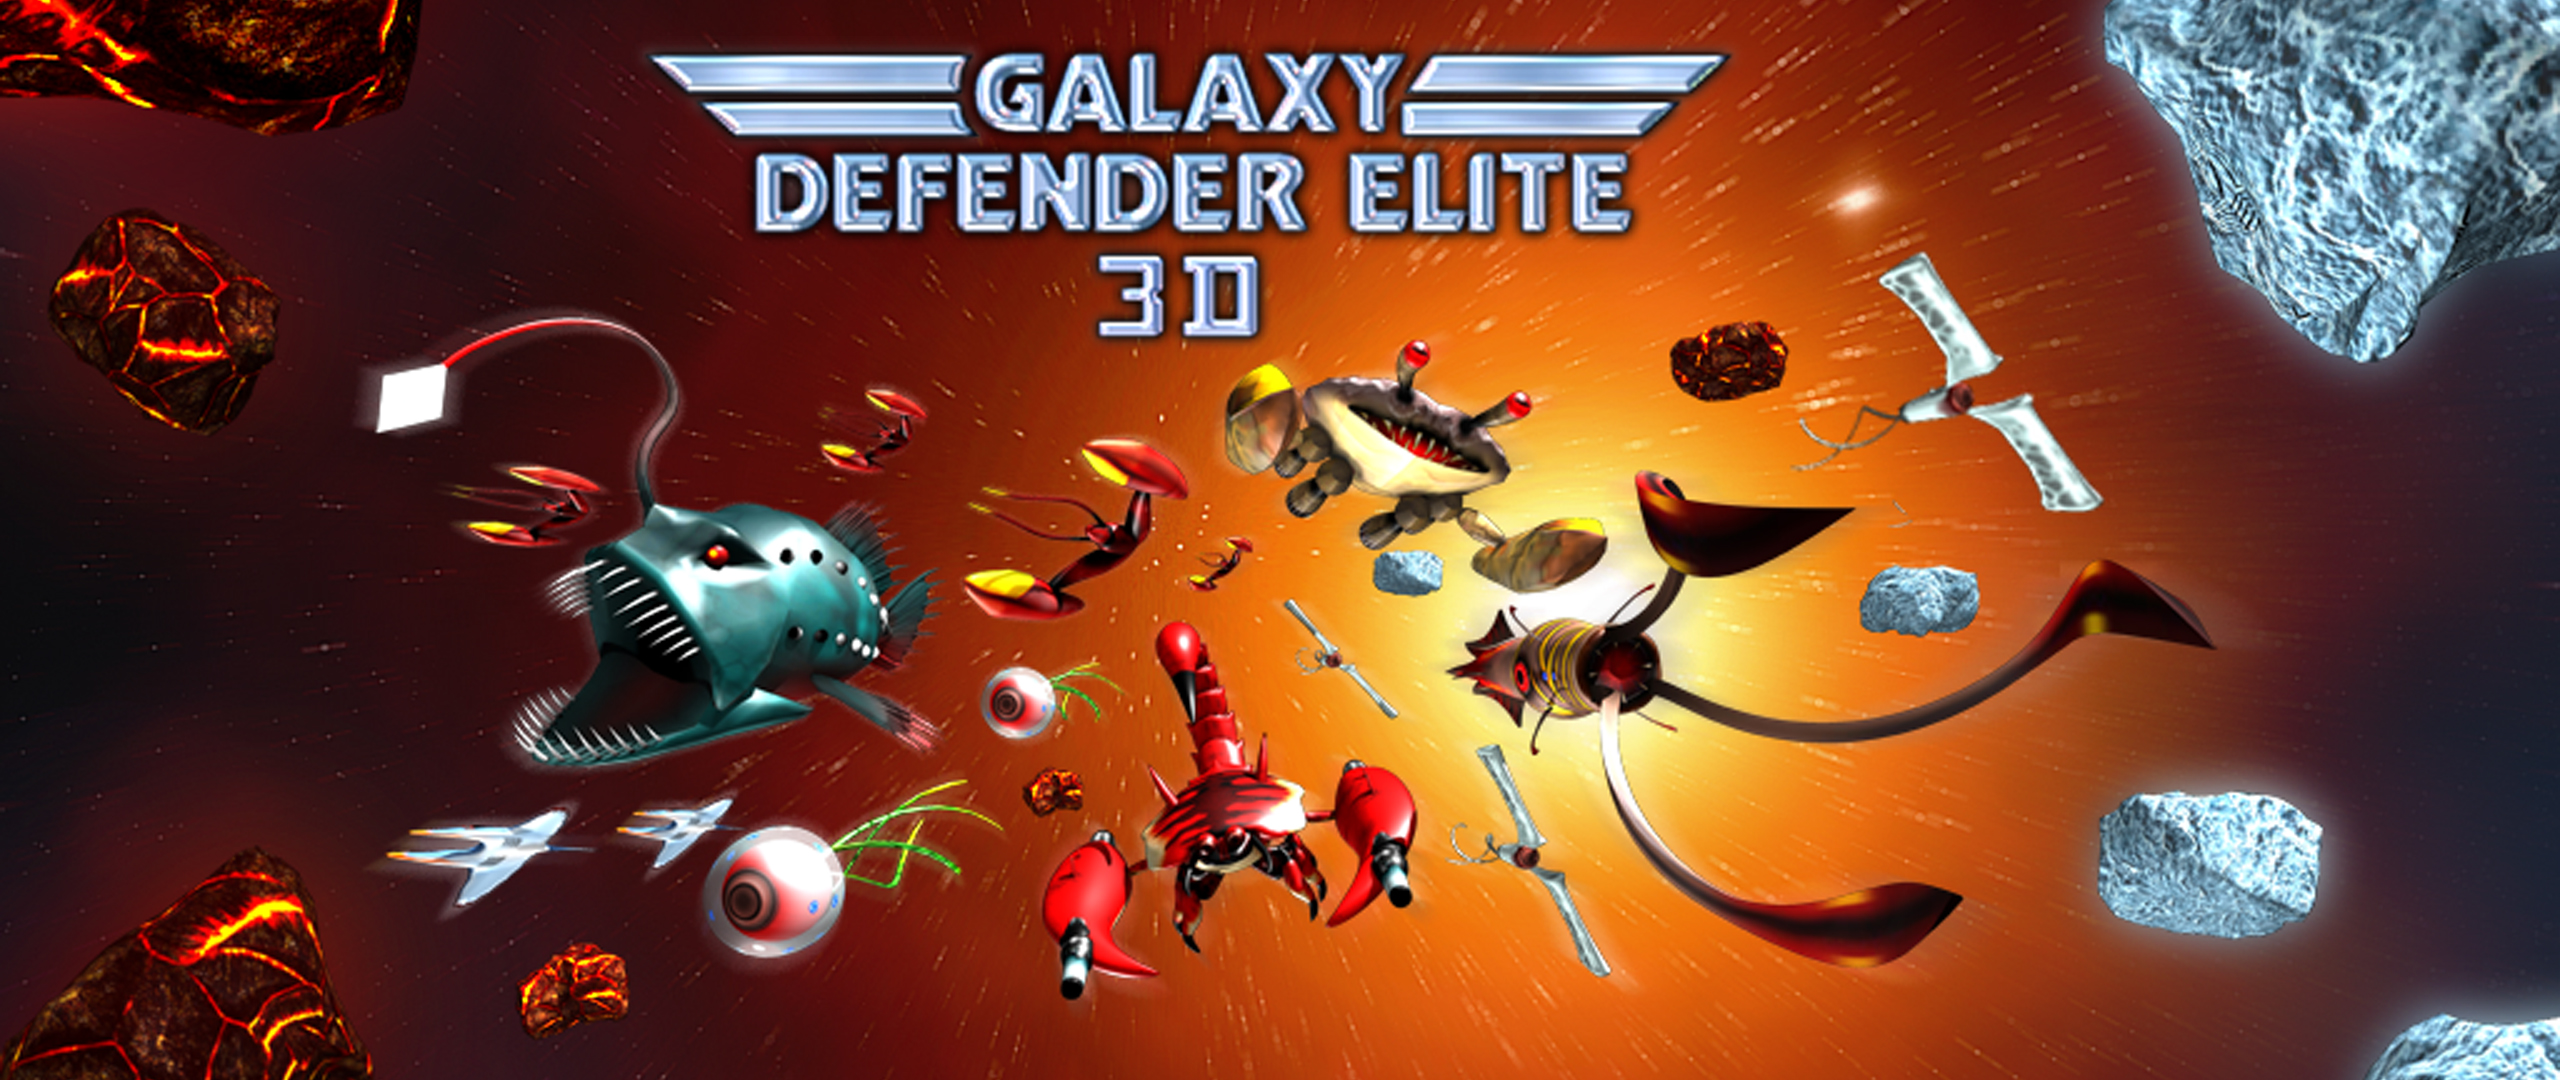 Galaxy Defender Elite 3D